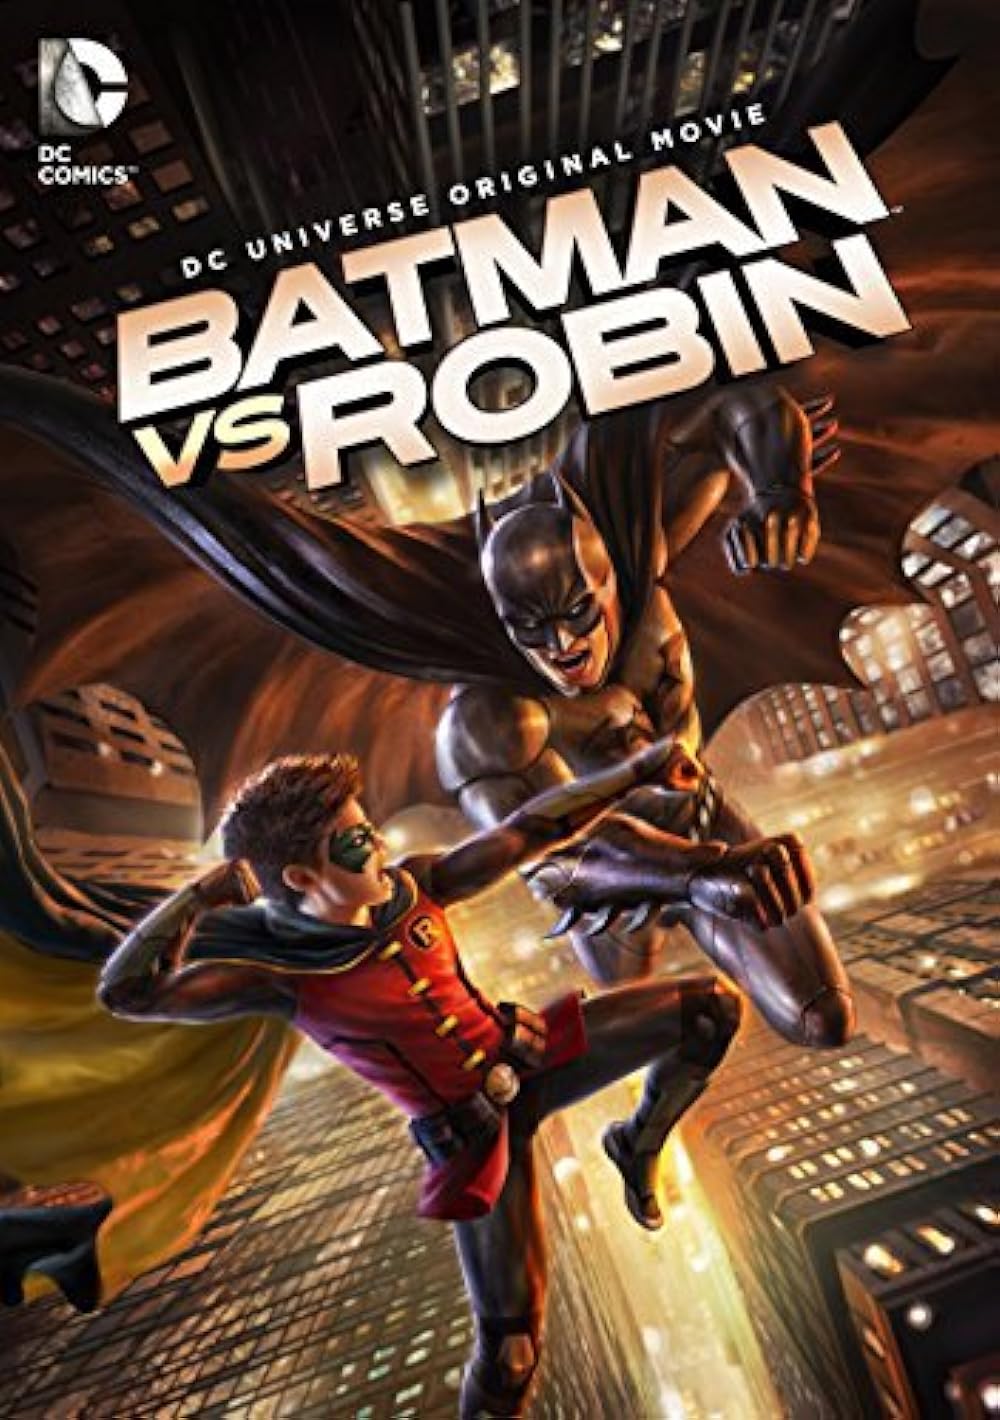 FULL MOVIE: Batman vs. Robin (2015)